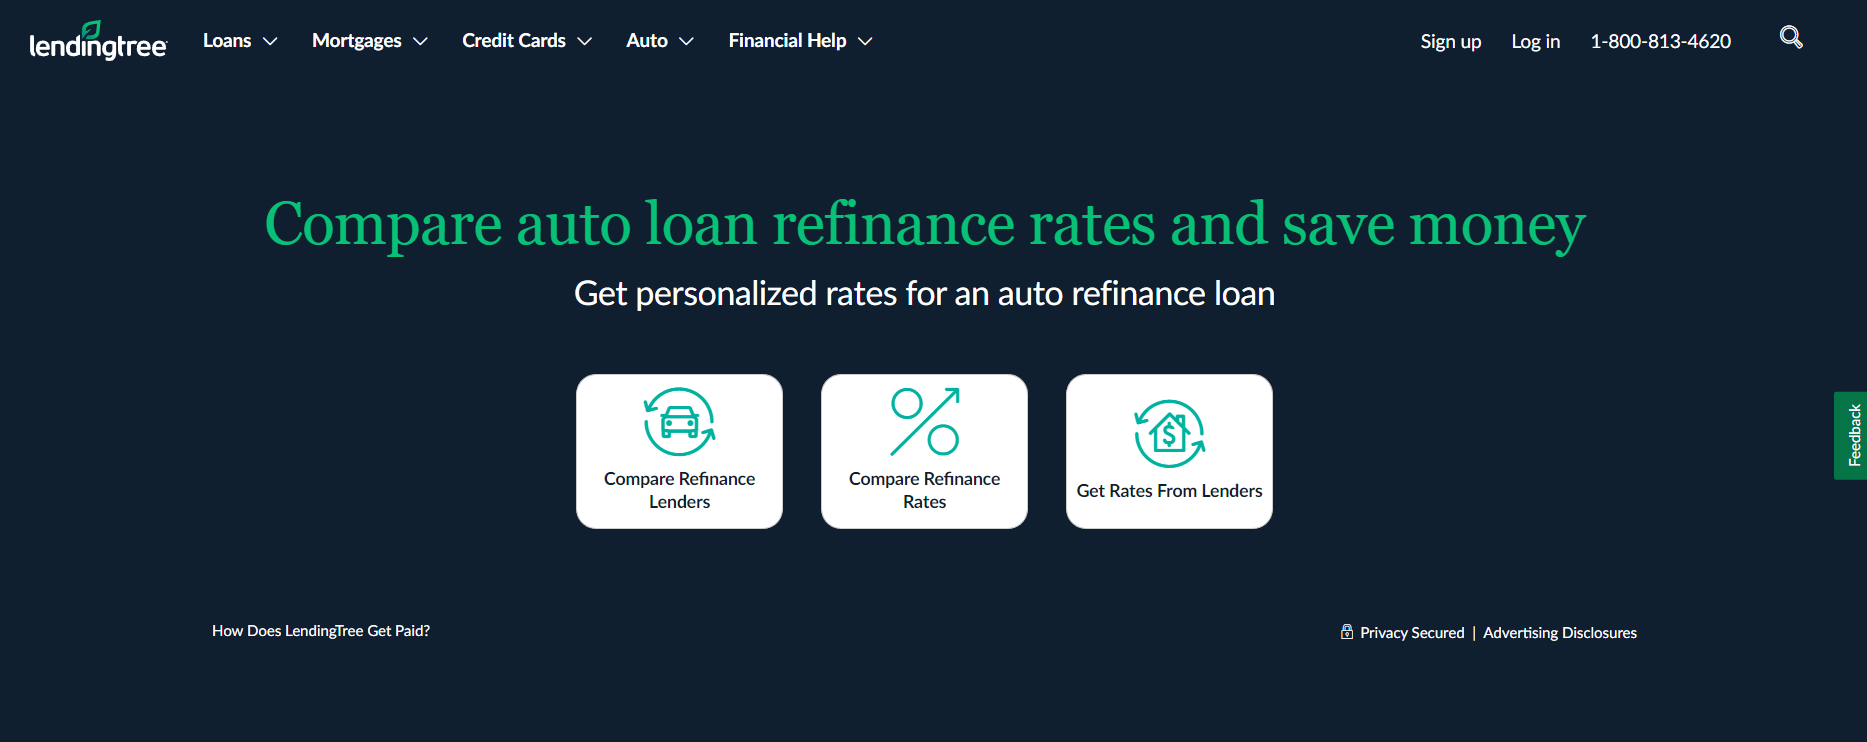 Lending Tree auto refinance page